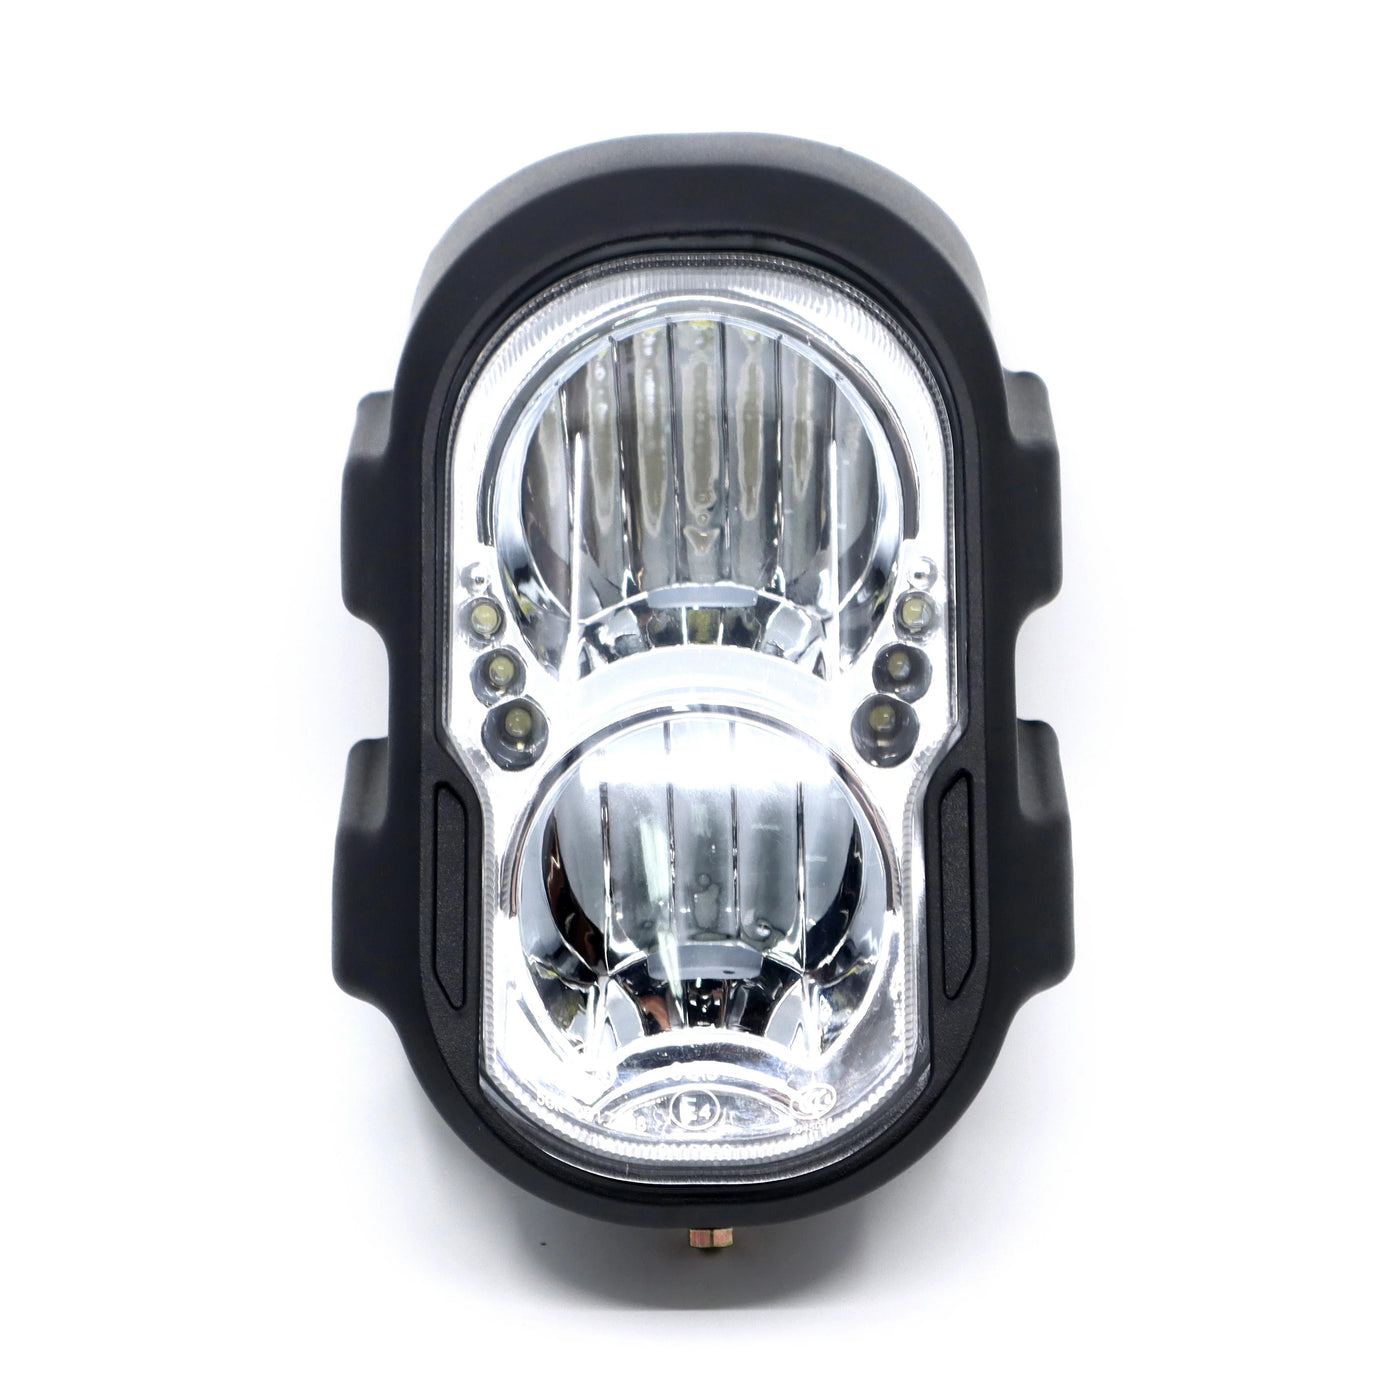 Surron Front Headlight (L1E street version)